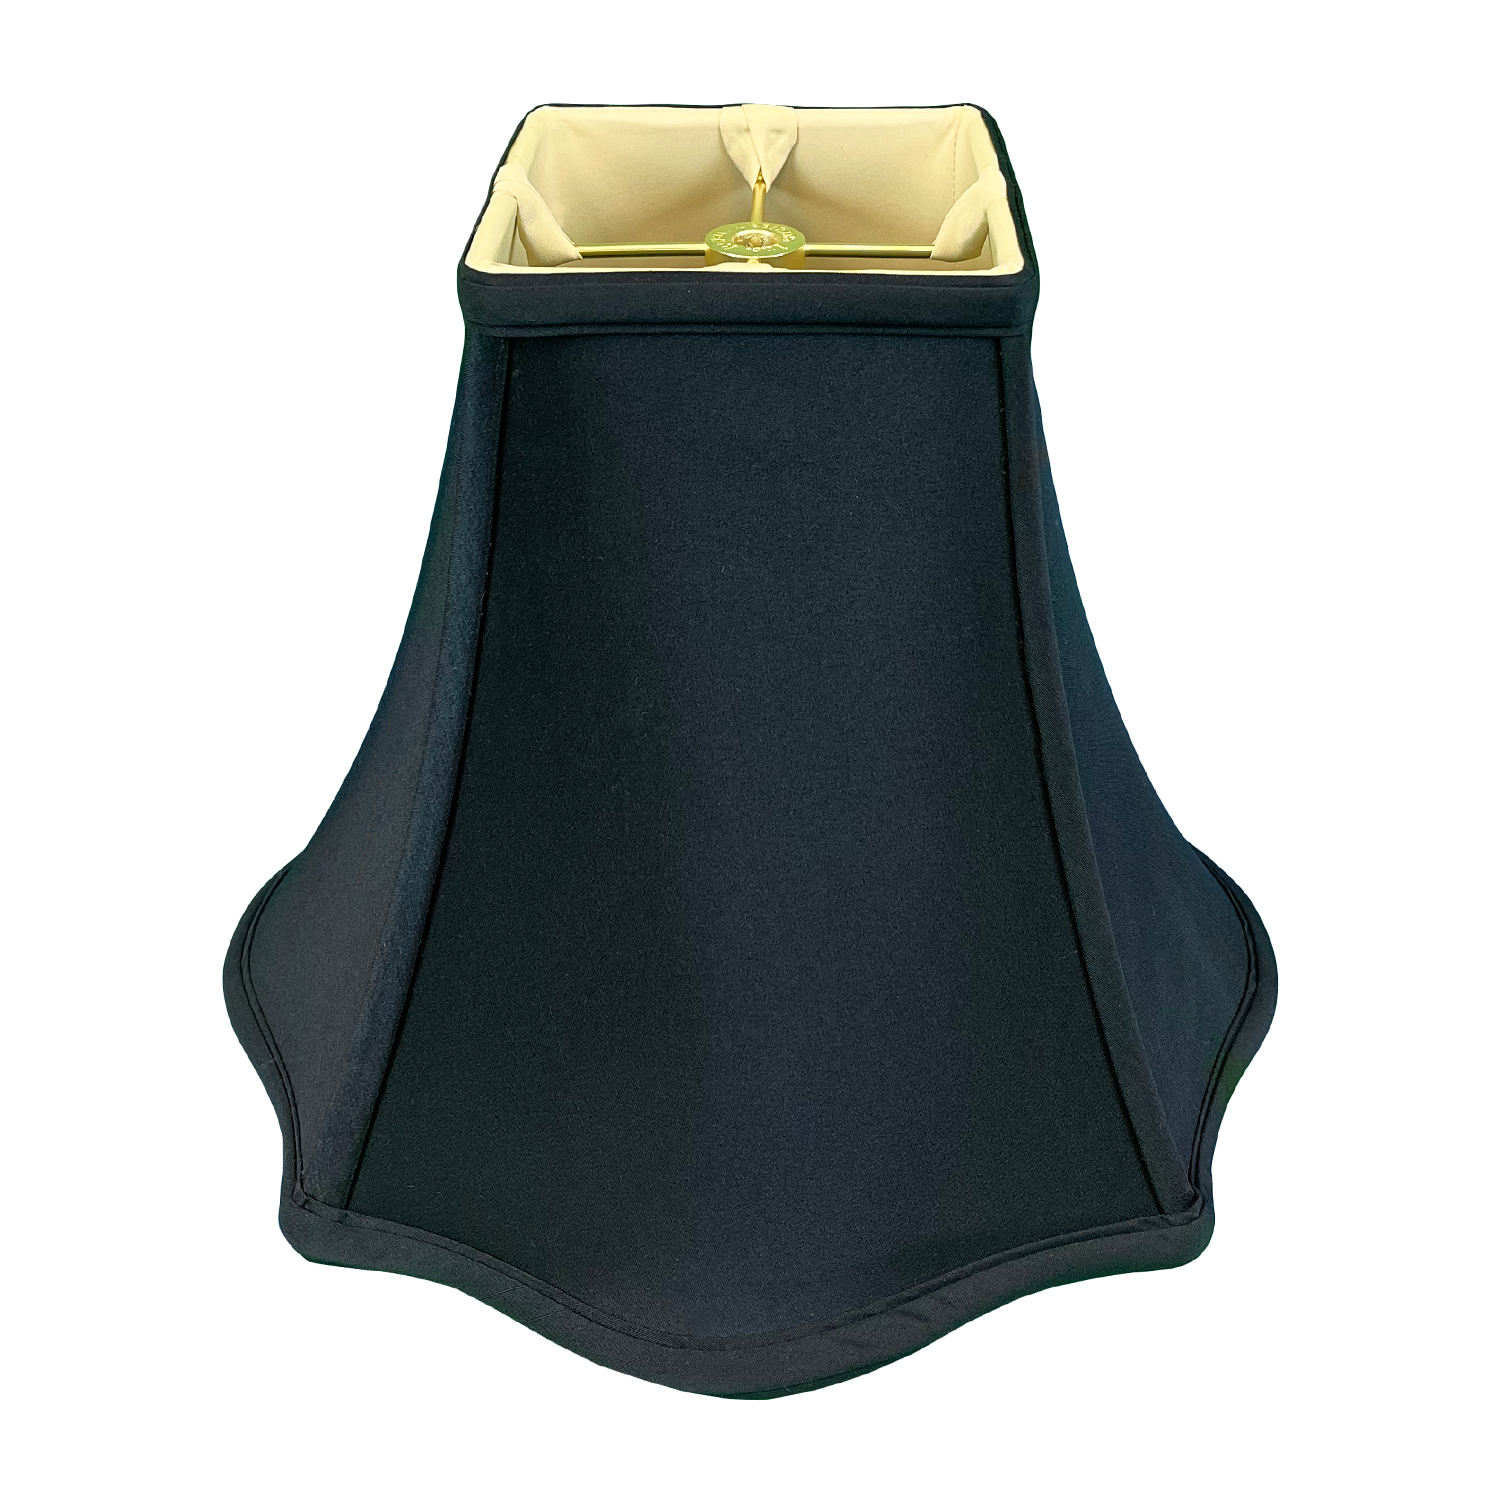 Royal Designs Fancy Square Bell Basic Lamp Shade, Black, 7 x 16 x 12.75